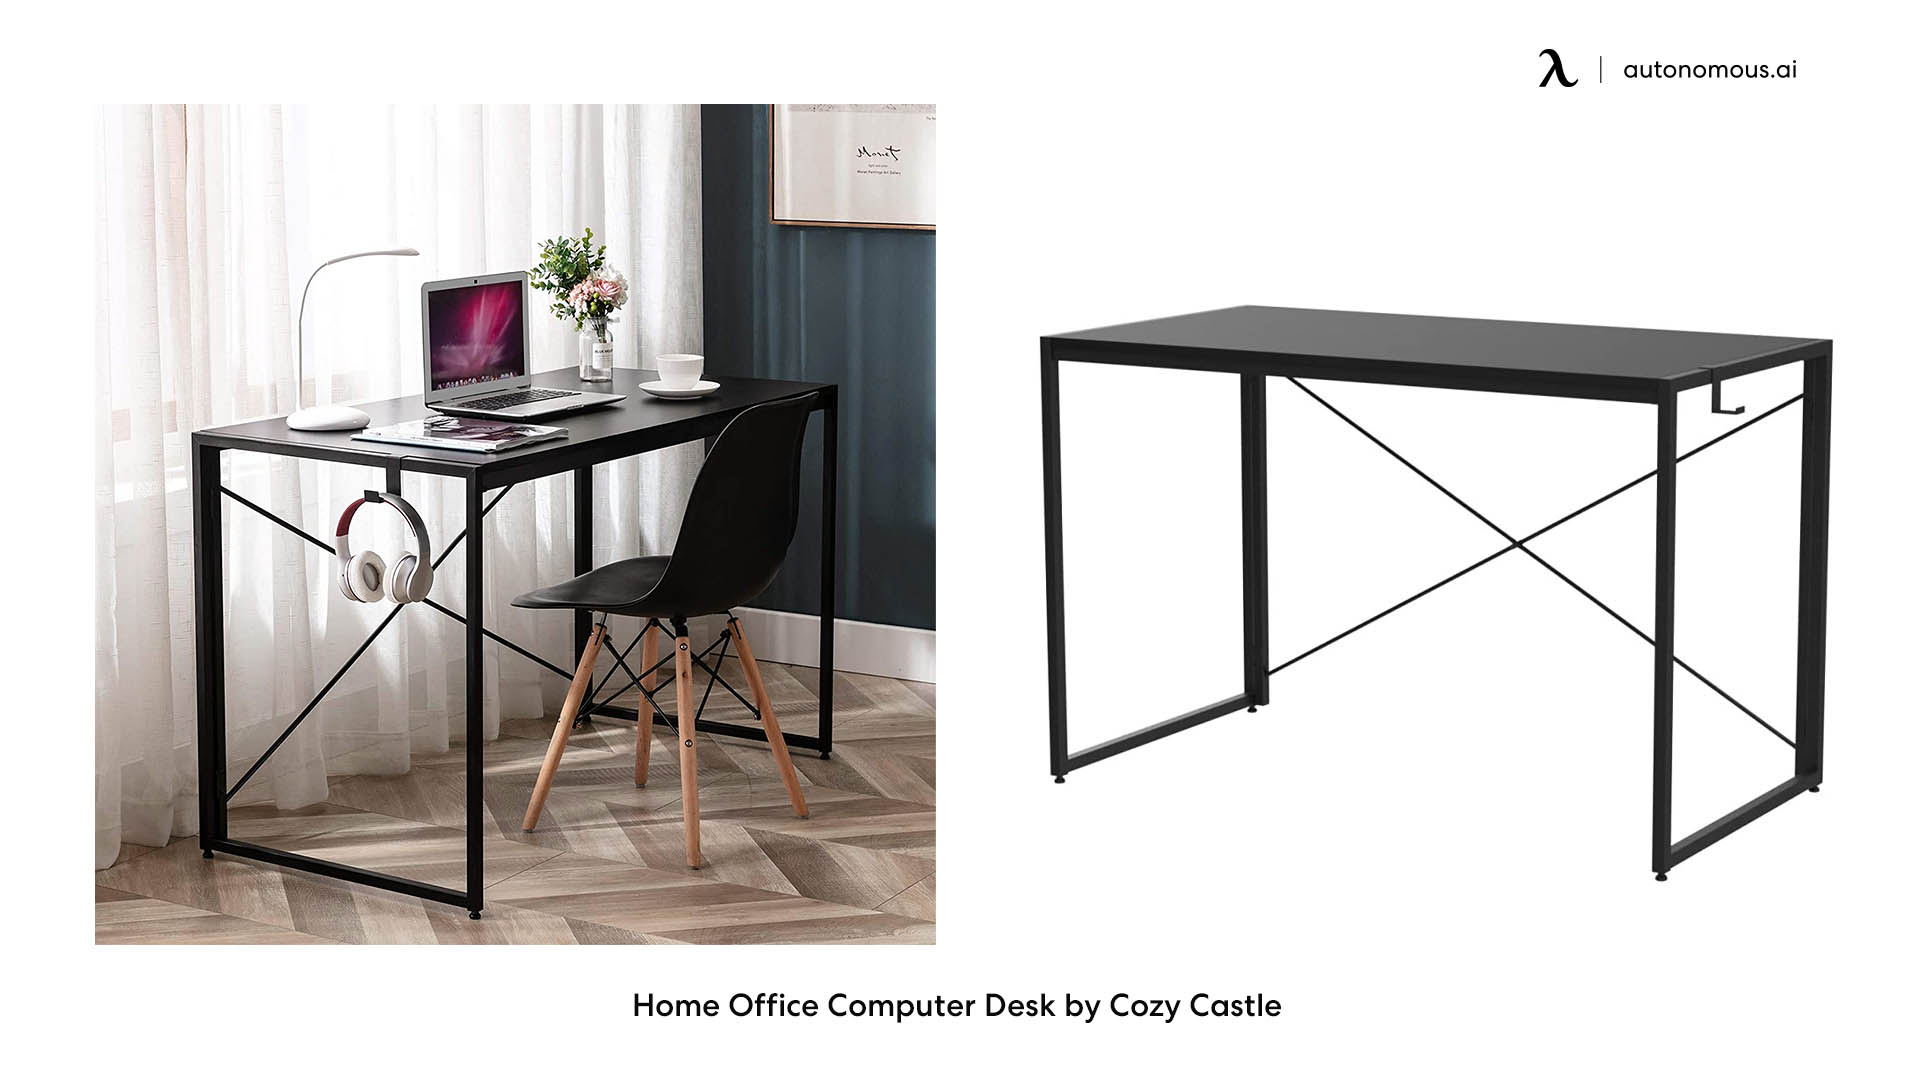 Home Office Computer Desk by Cozy Castle